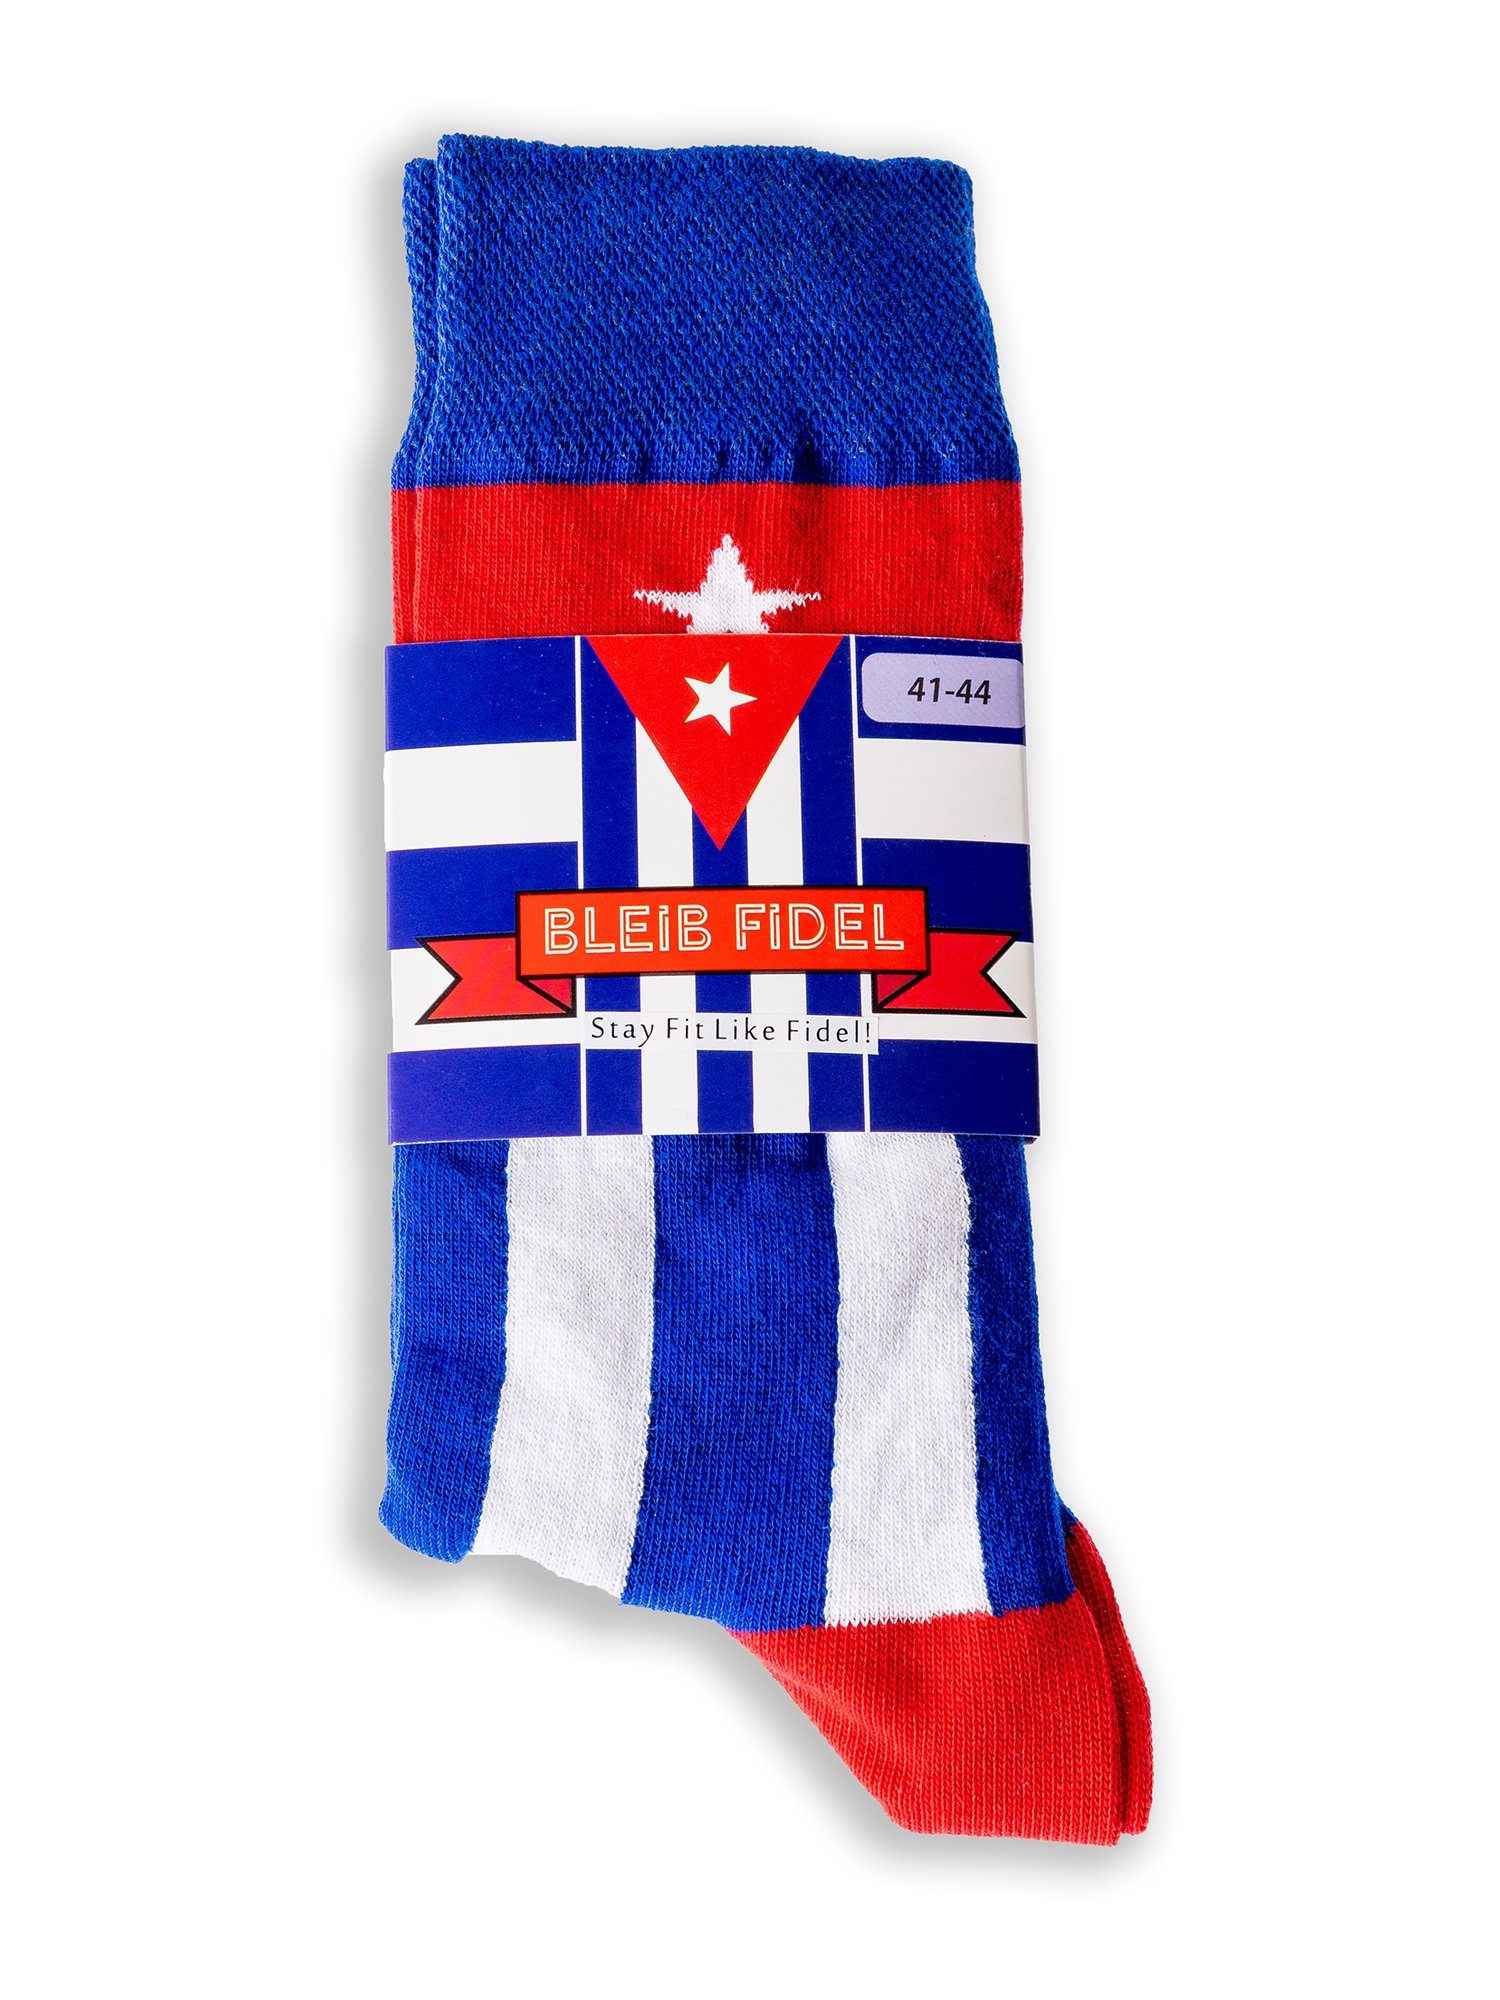 Chili Leisure Freizeitsocken Fidel Banderole Socks Lifestyle